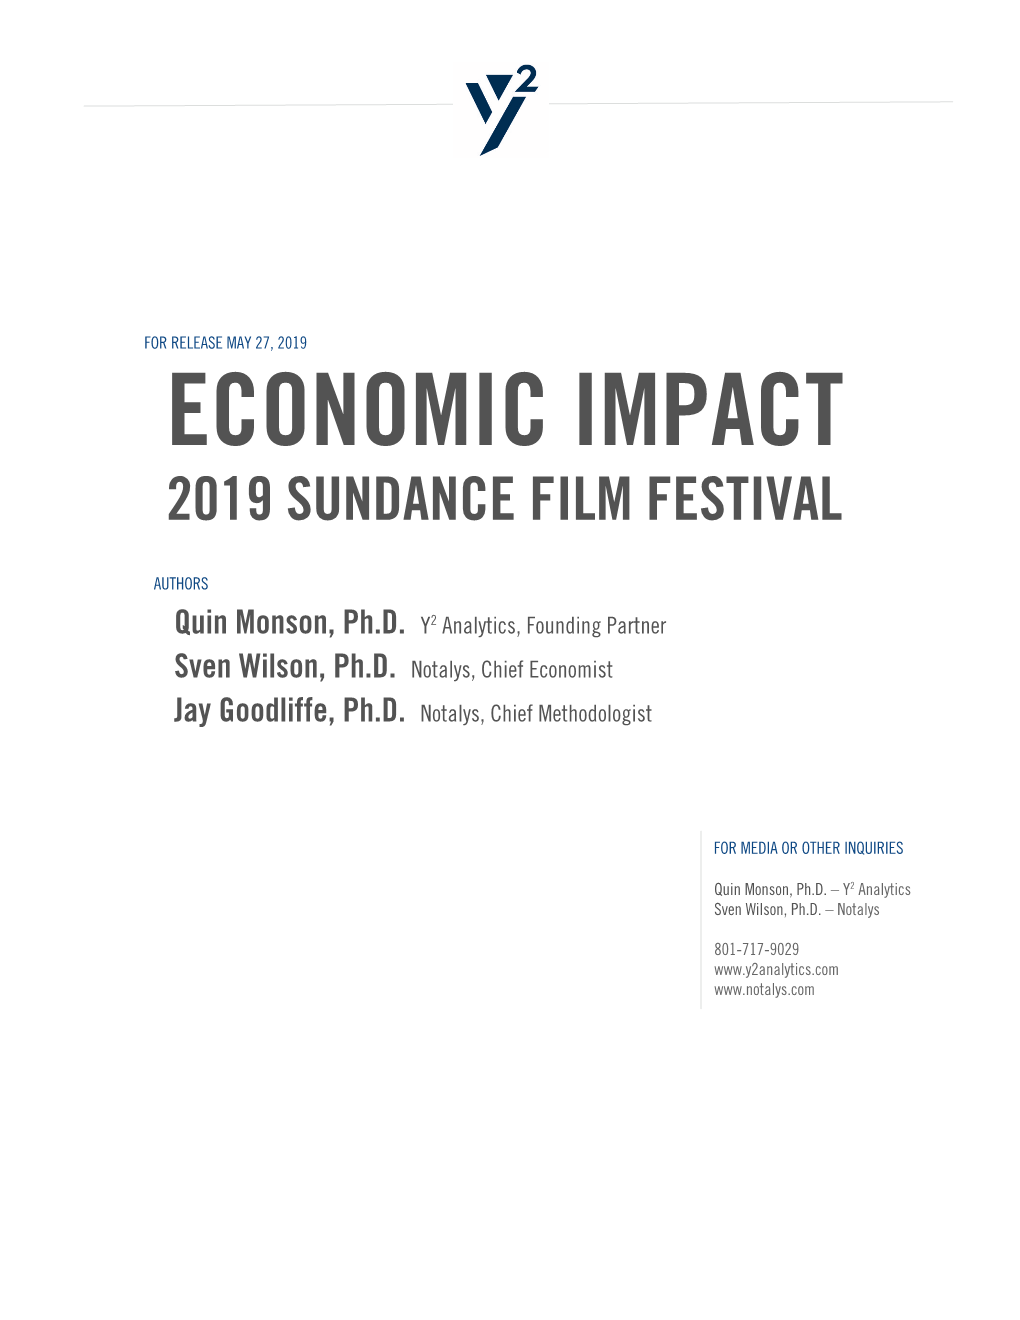 Read the 2019 Sundance Film Festival Economic Impact Report